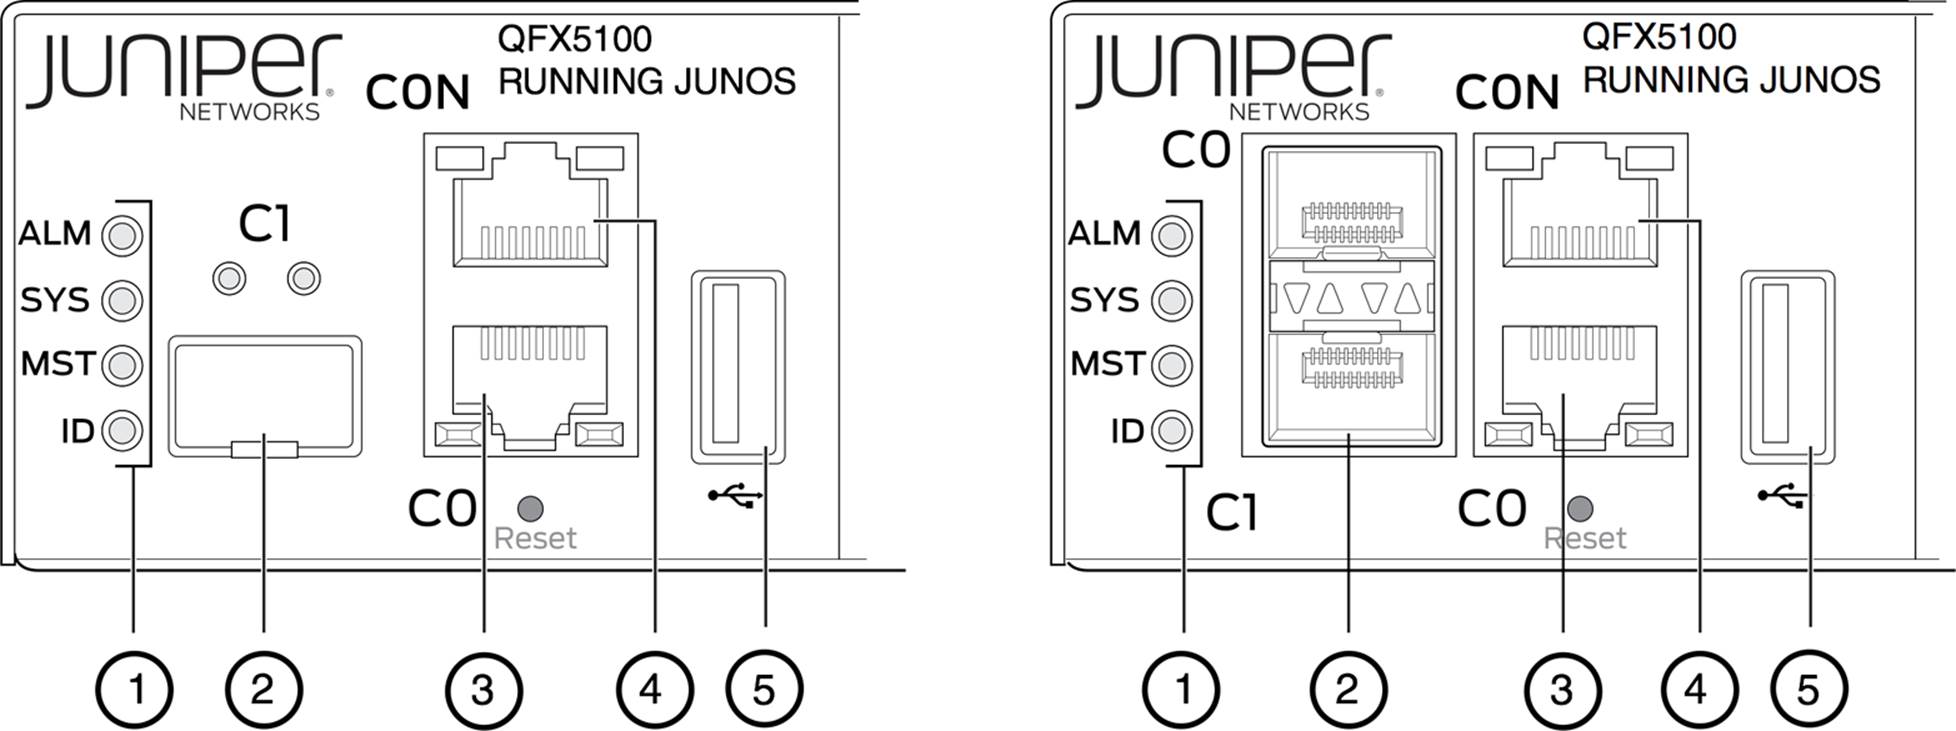 The Juniper QFX5100 craft interface